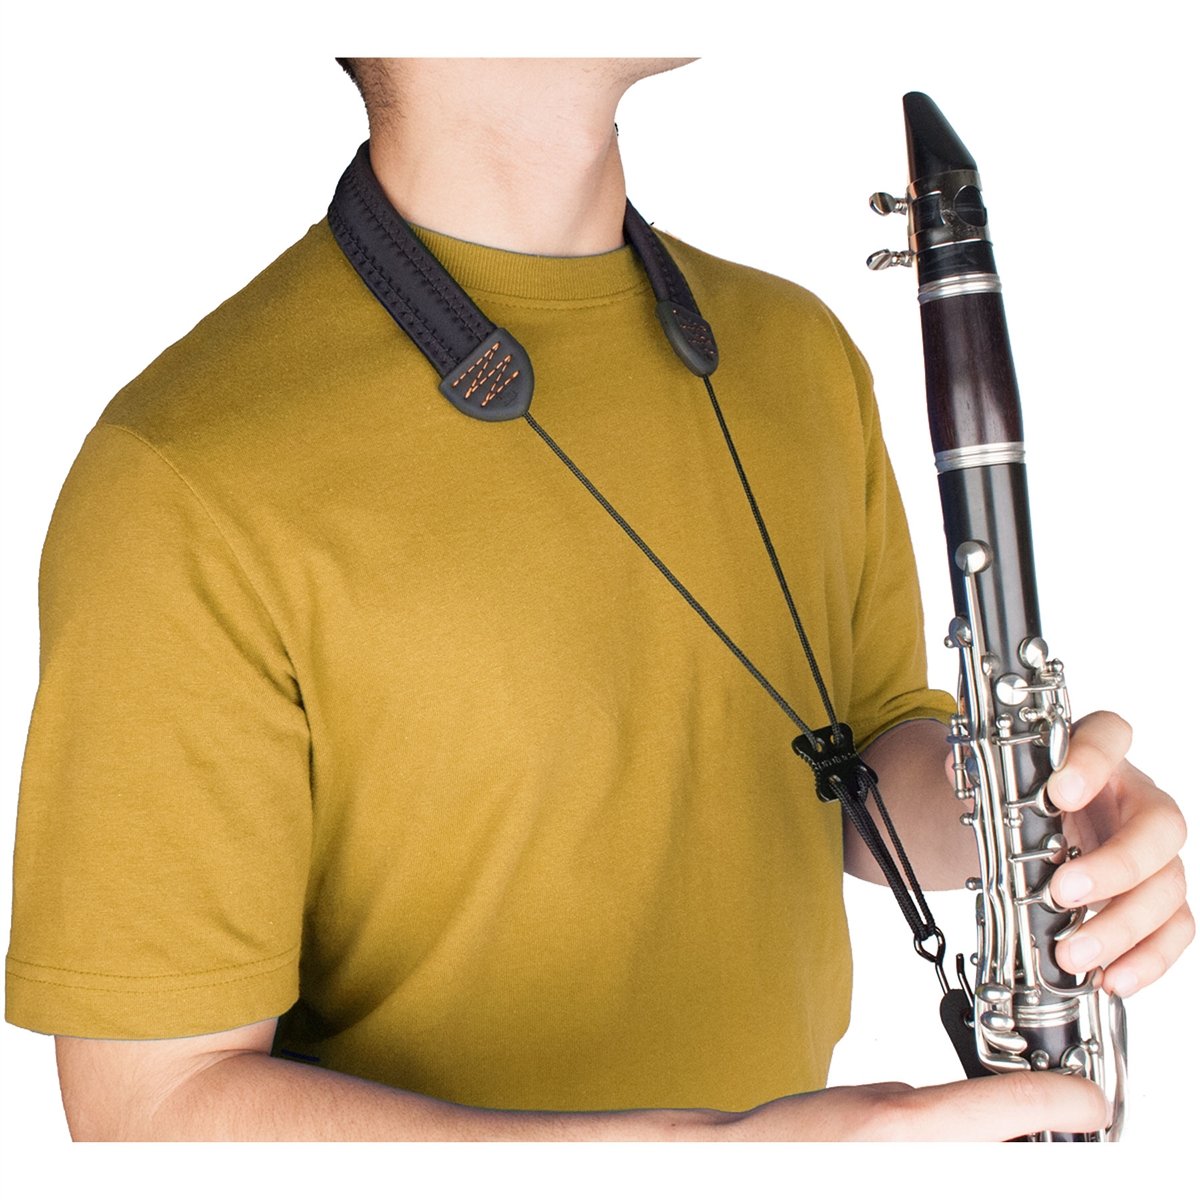 Protec - 20â€³ (Junior) Clarinet Neck Strap with Non-Elastic Cord-Accessories-Protec-Black-Music Elements